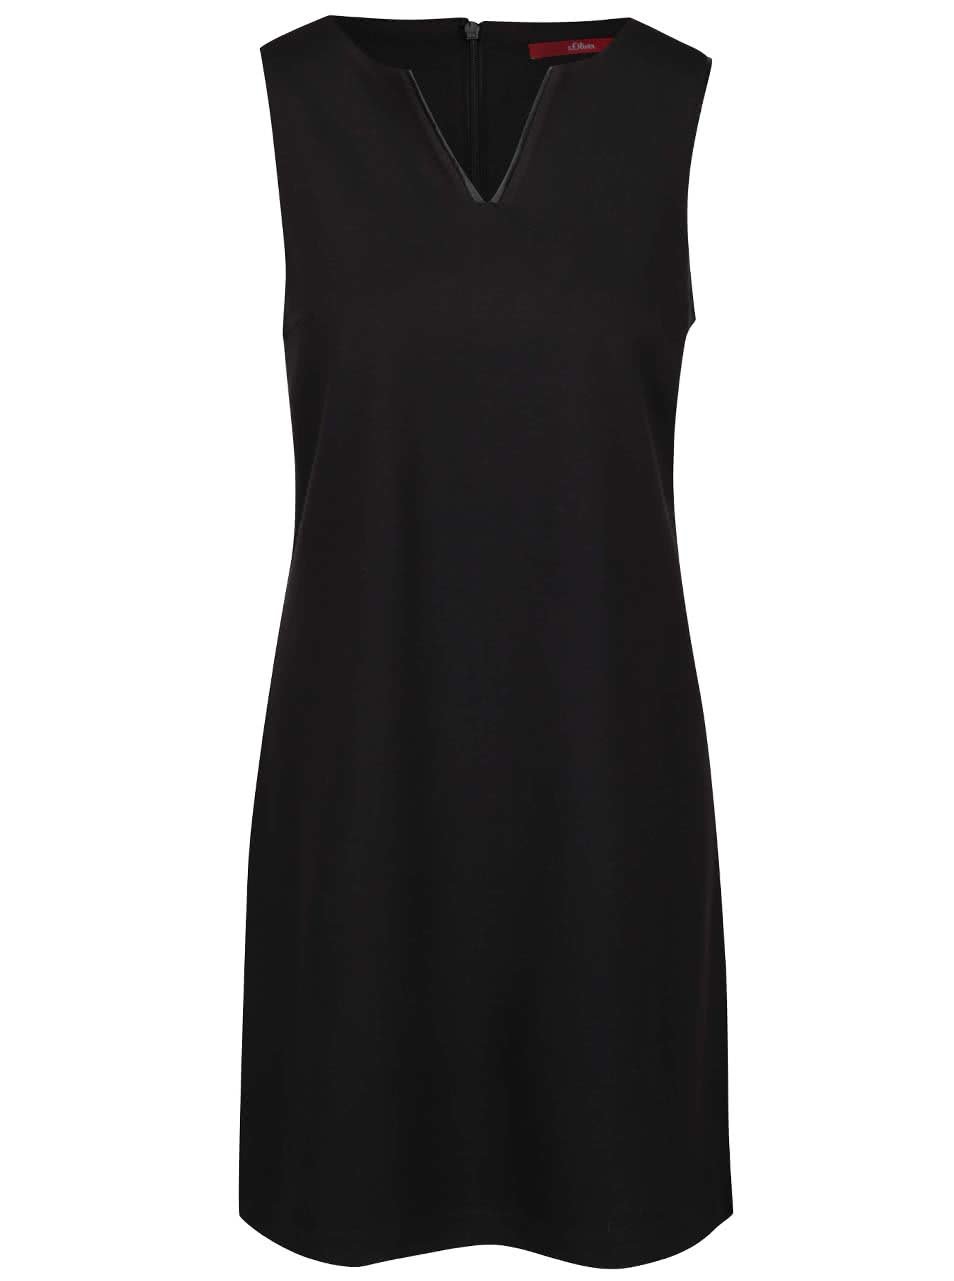 Černé šaty s koženkovými detaily s.Oliver